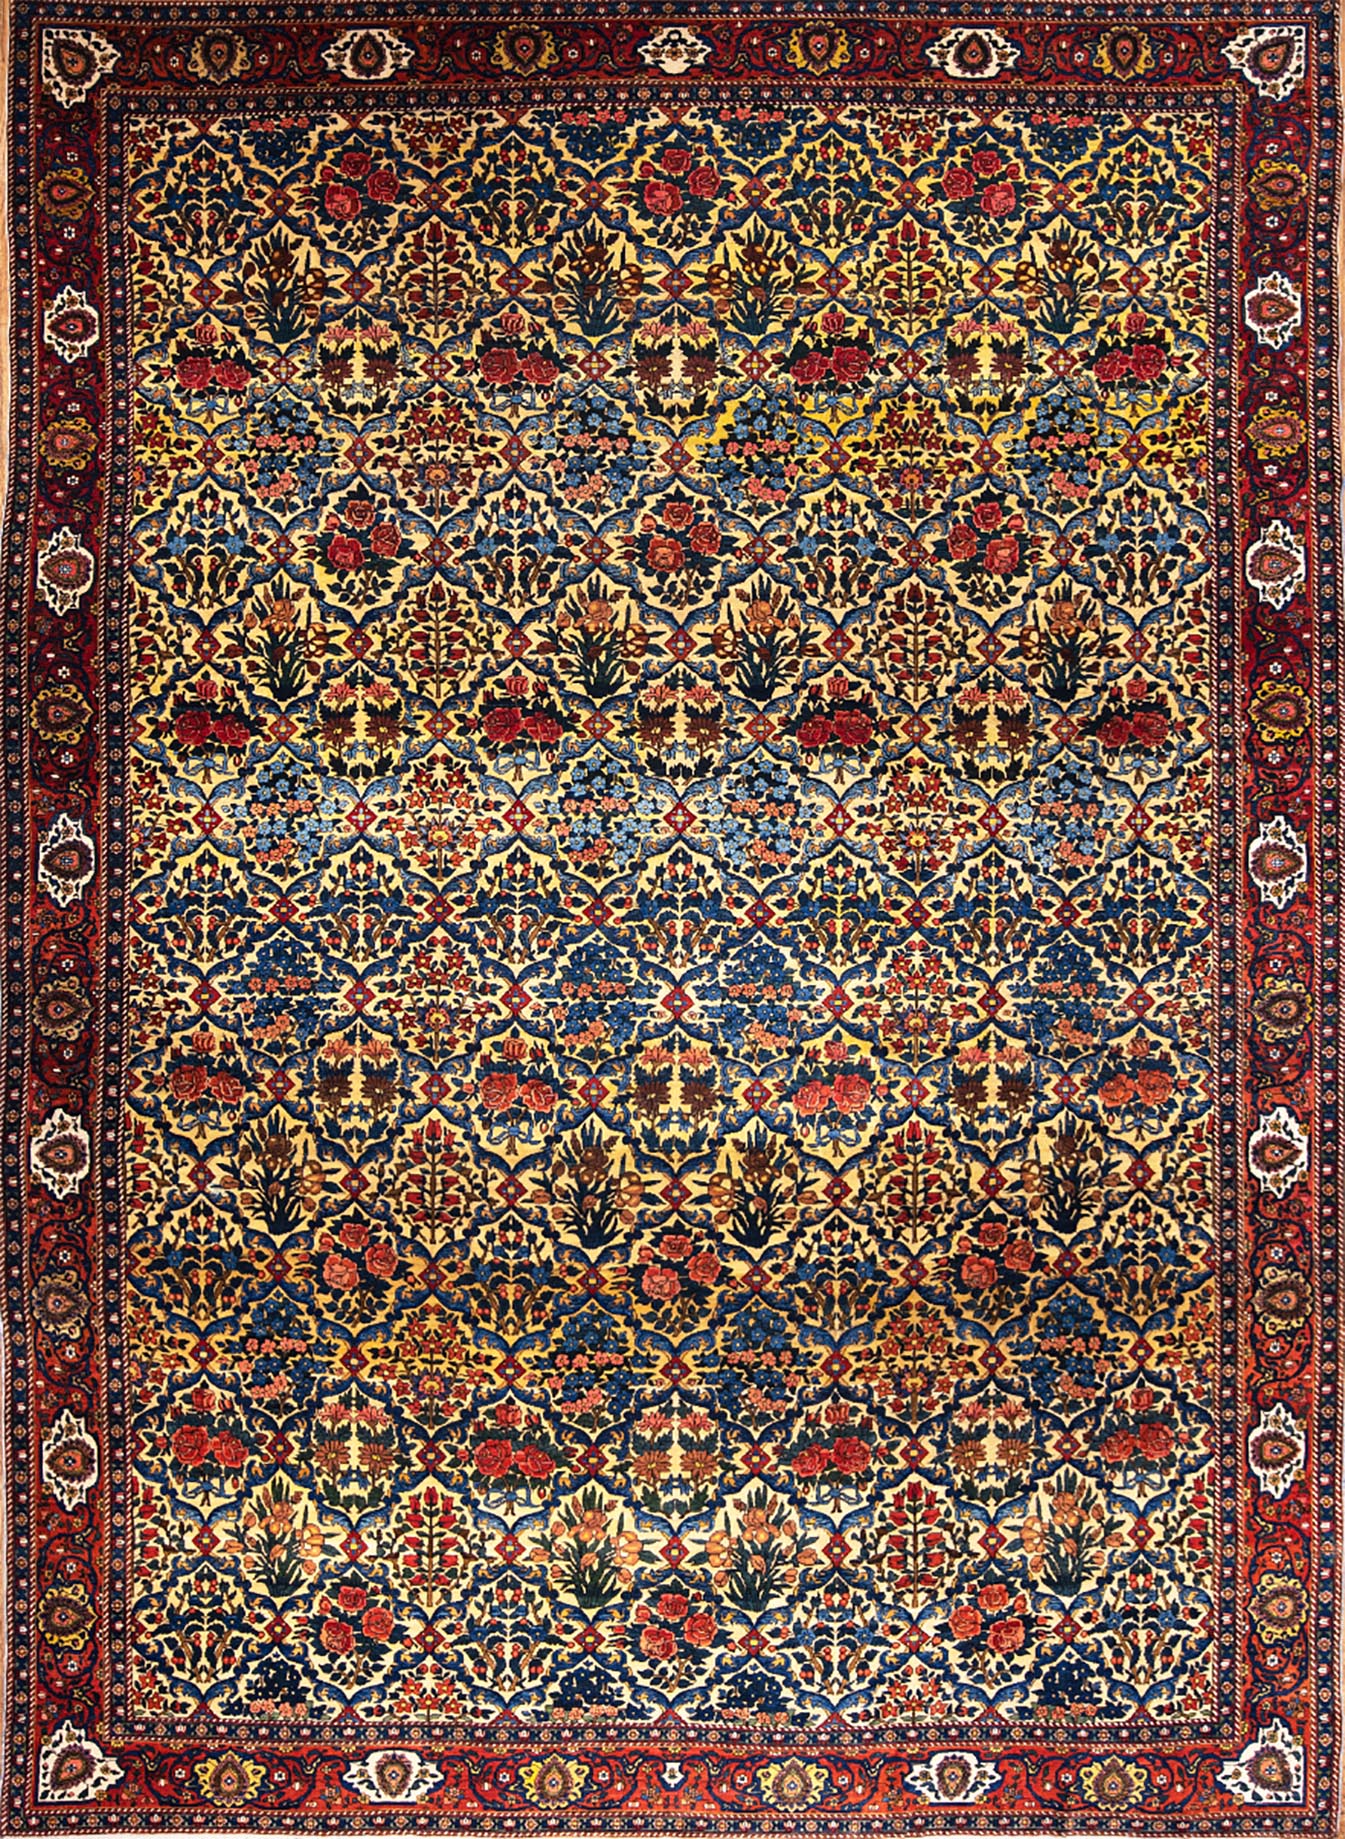 Antique Persian Bakhtiari rug, beige, and terracotta color. Size 15.3x20.5